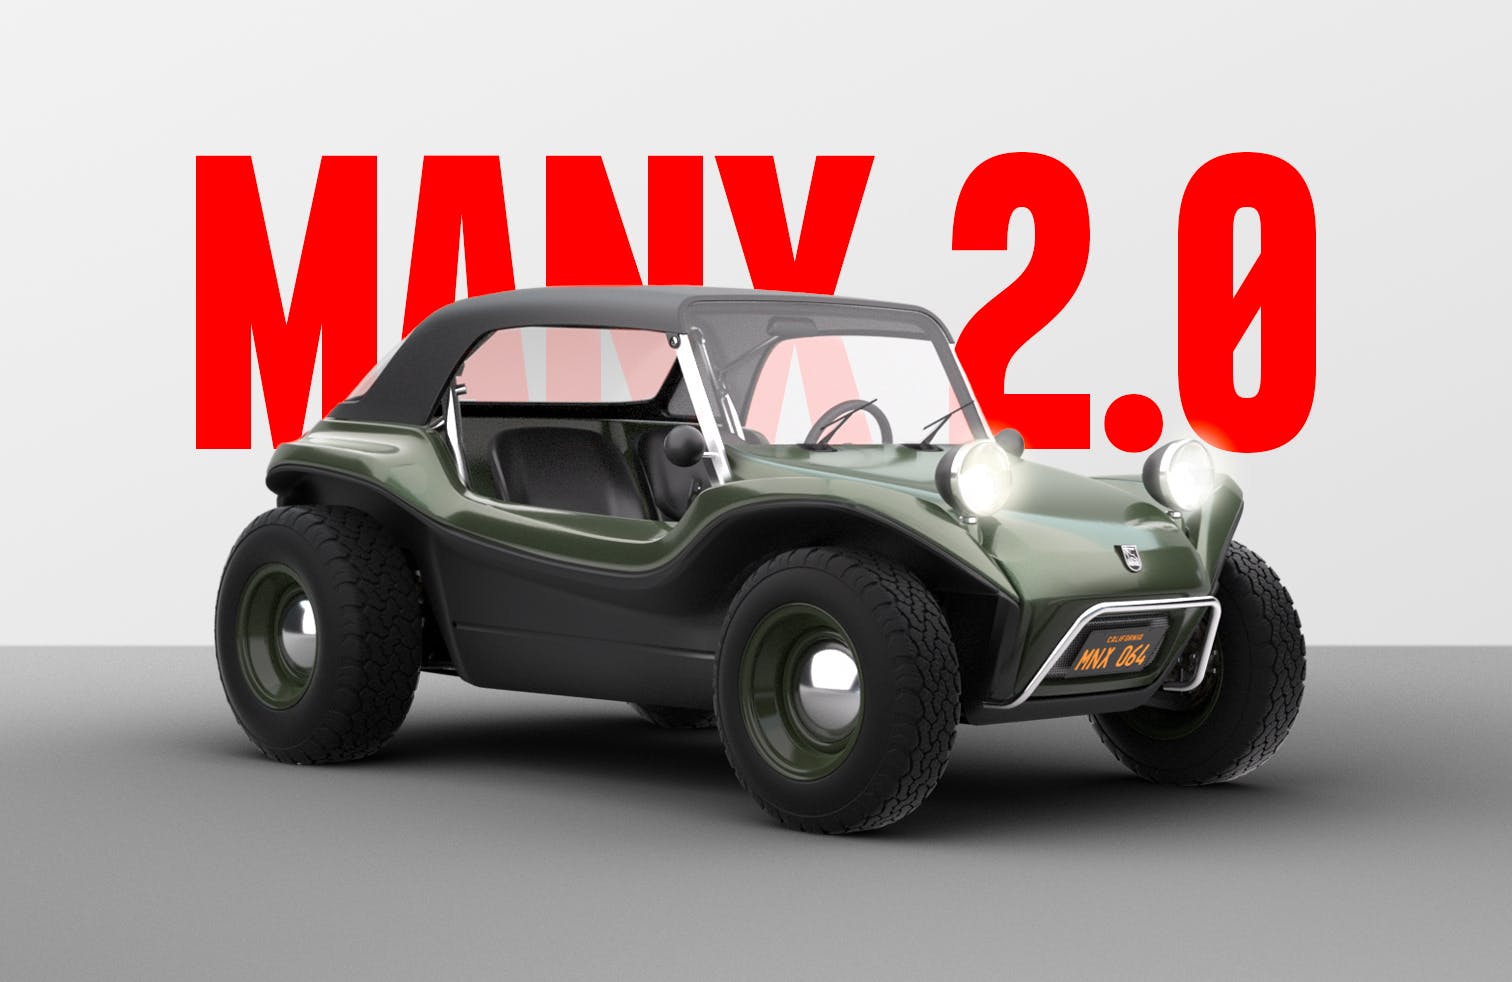 New Manx Buggy on grey background